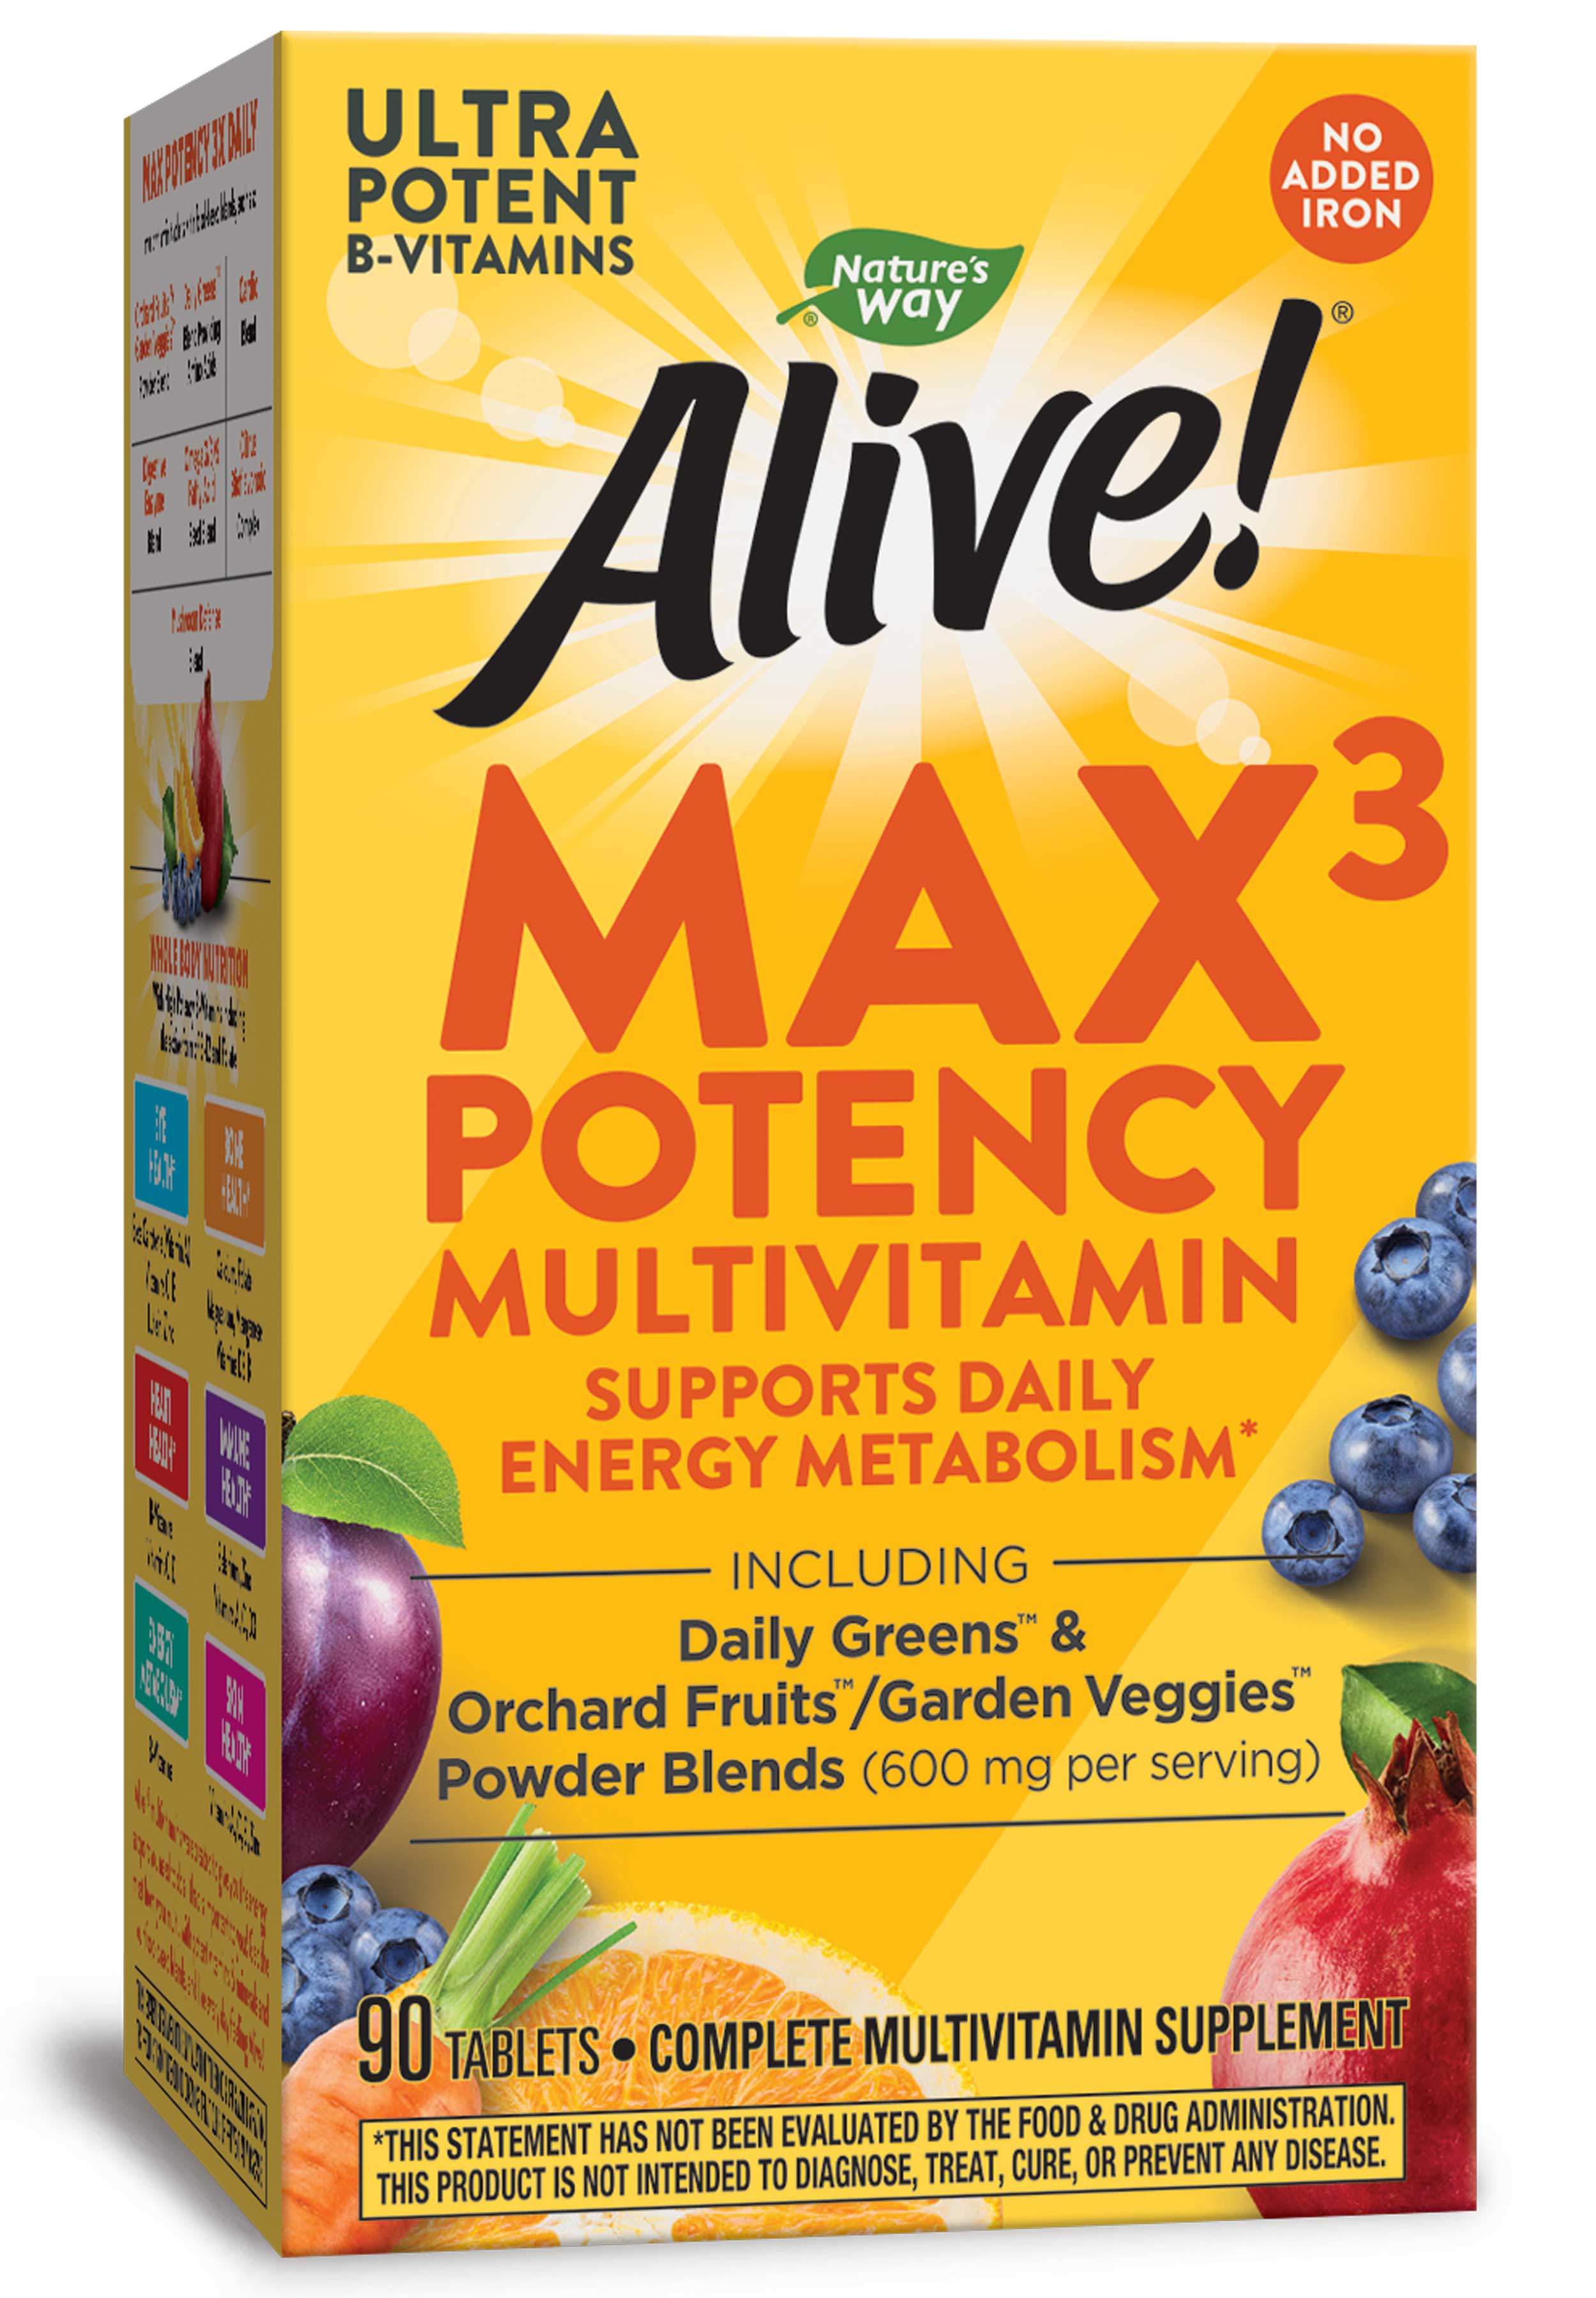 Nature's Way Alive! Max3 Daily Multi-Vitamin (No Added Iron)